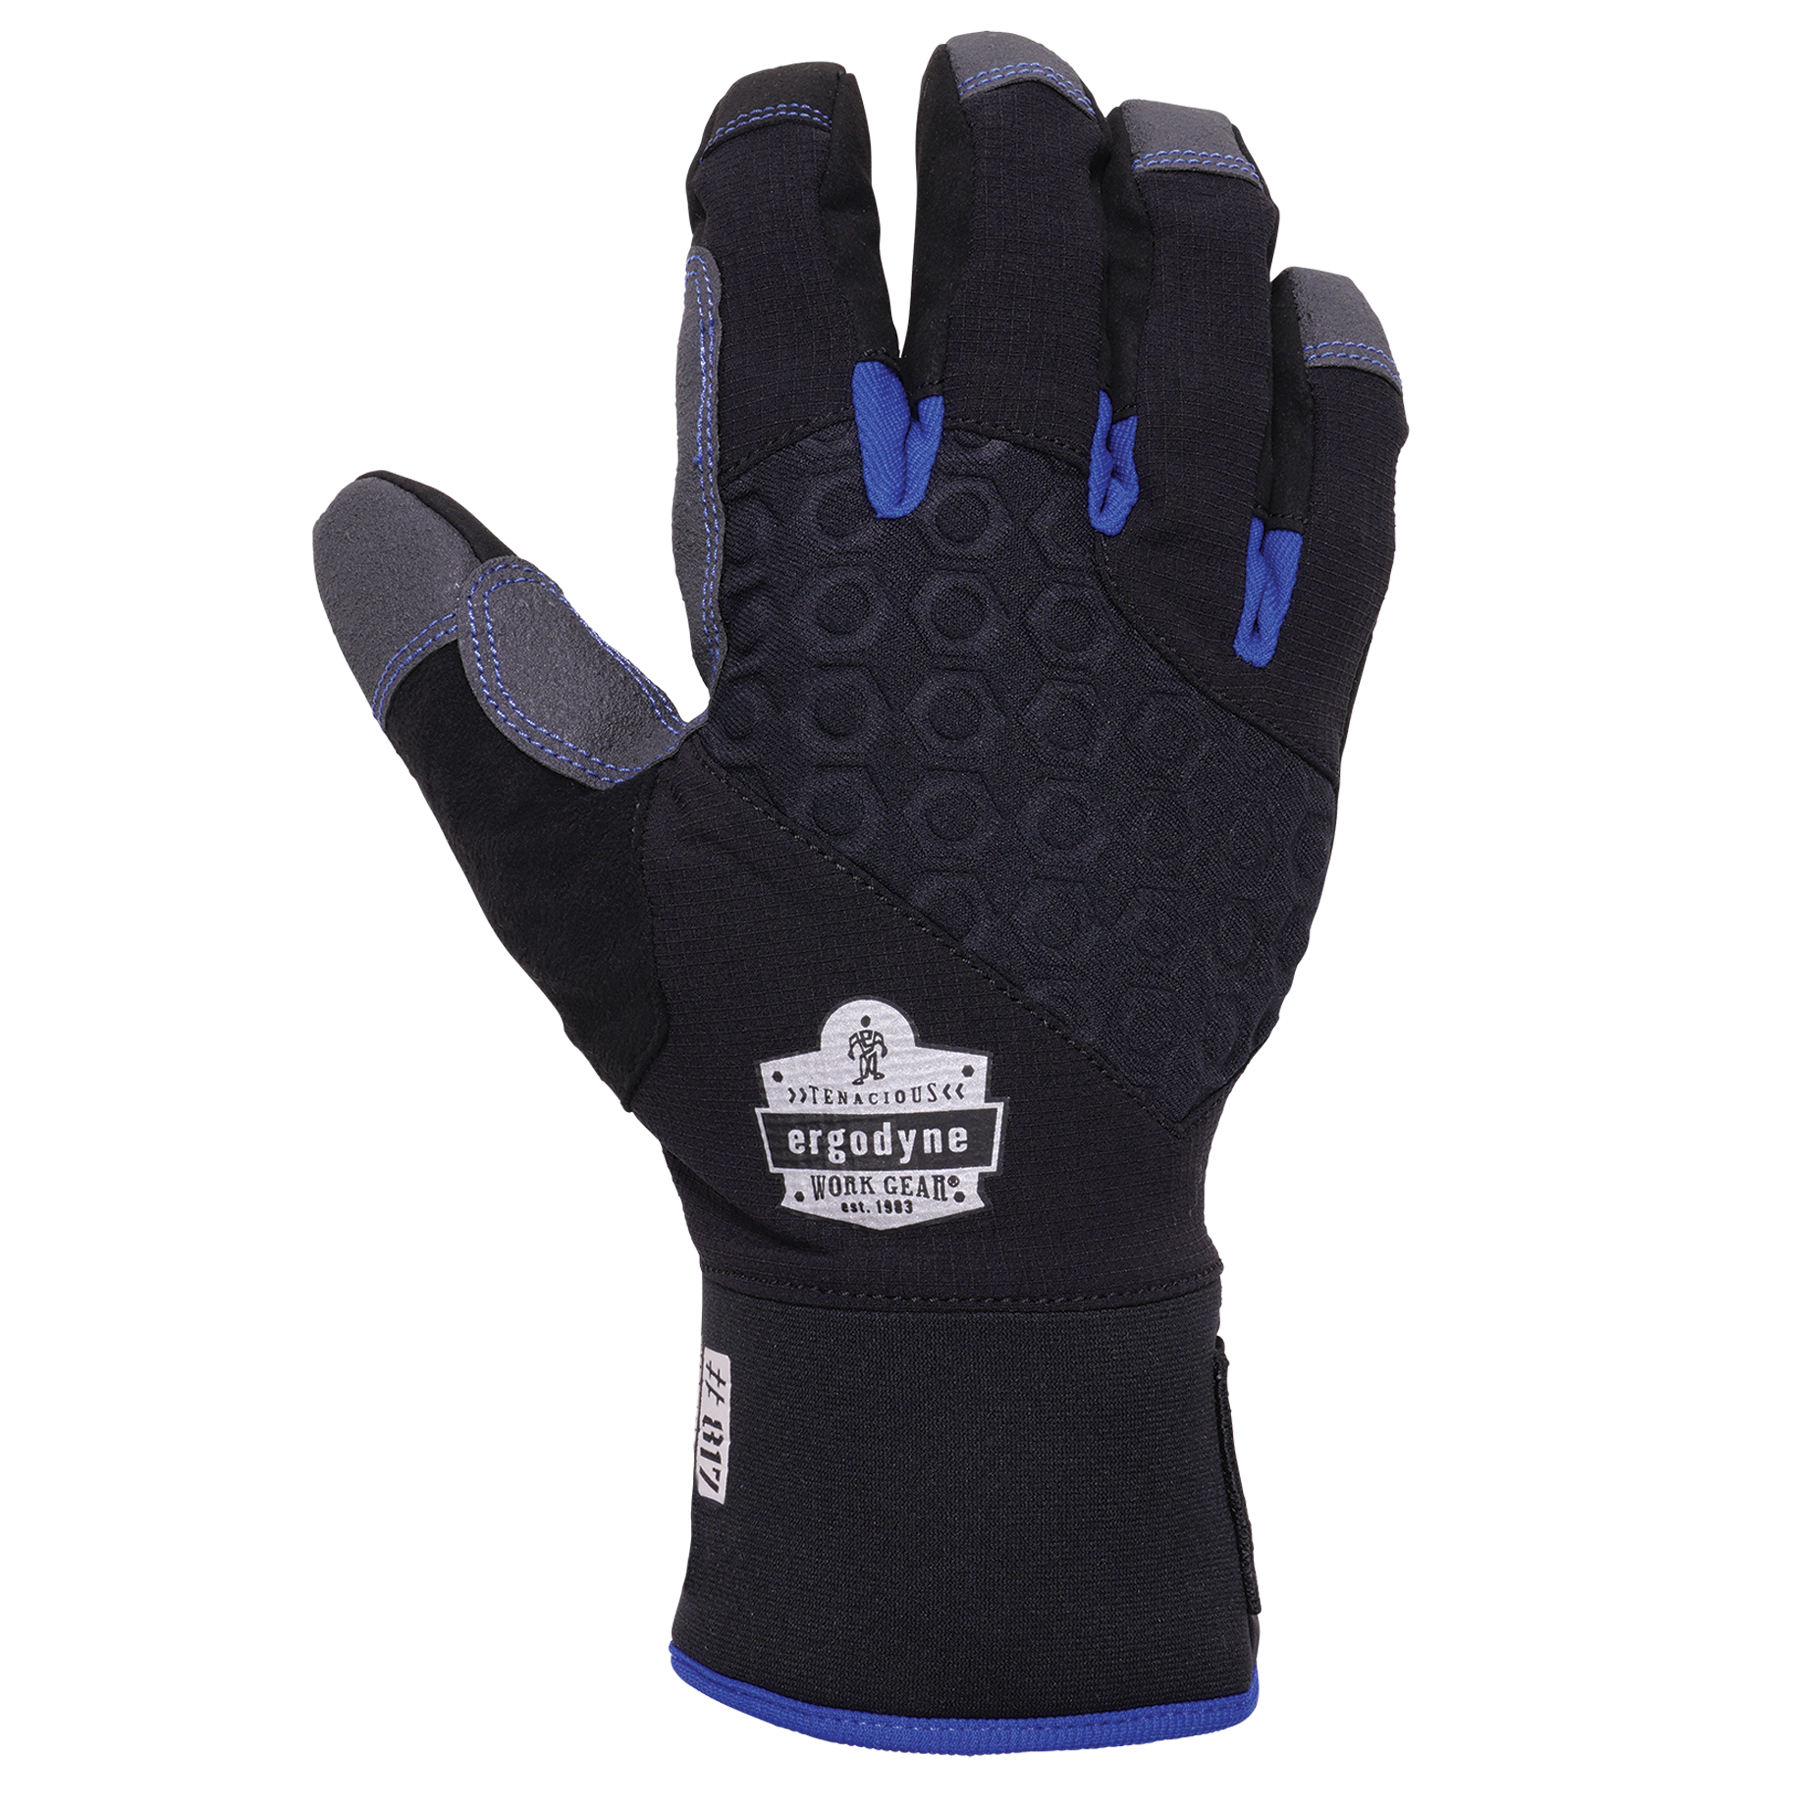 Reinforced Thermal Utility Gloves | Ergodyne